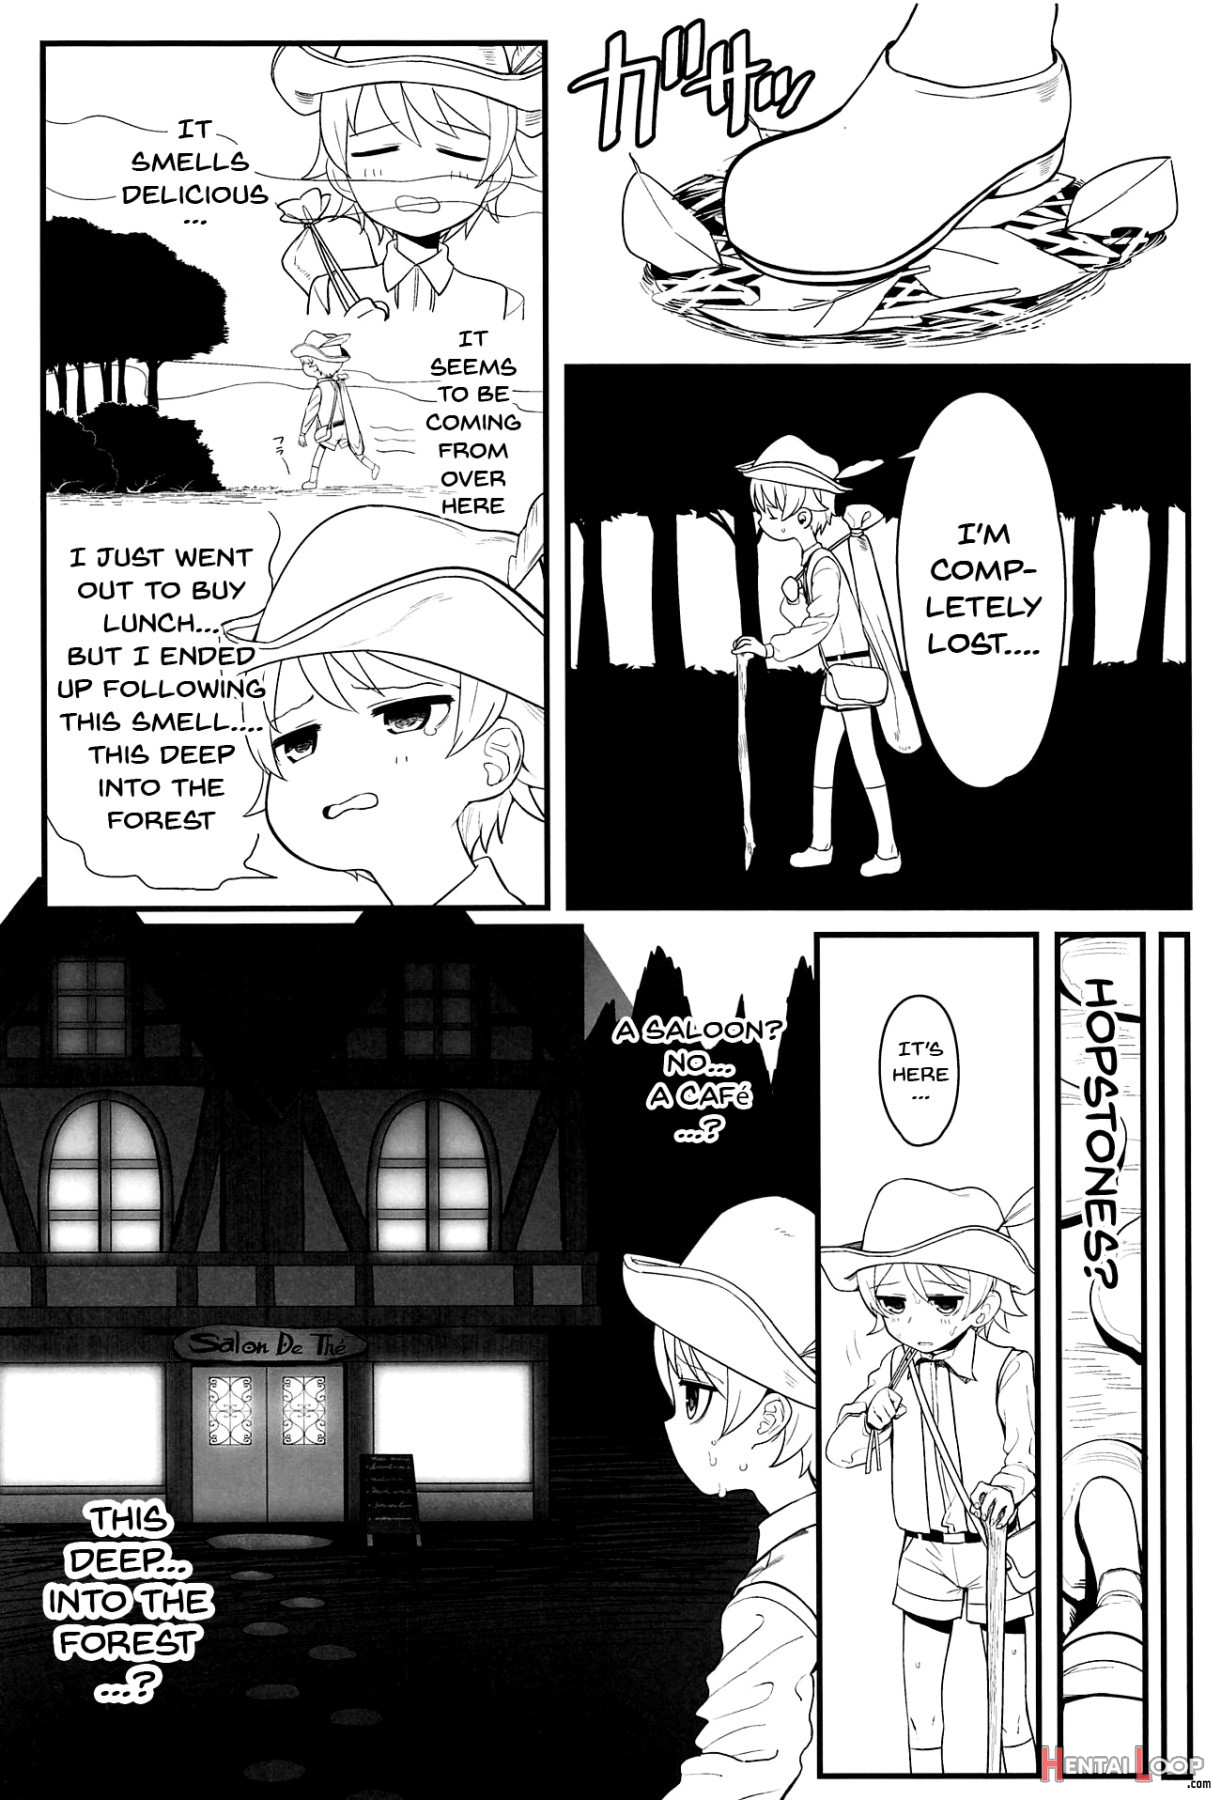 Morikubo Ecchi's Night page 3